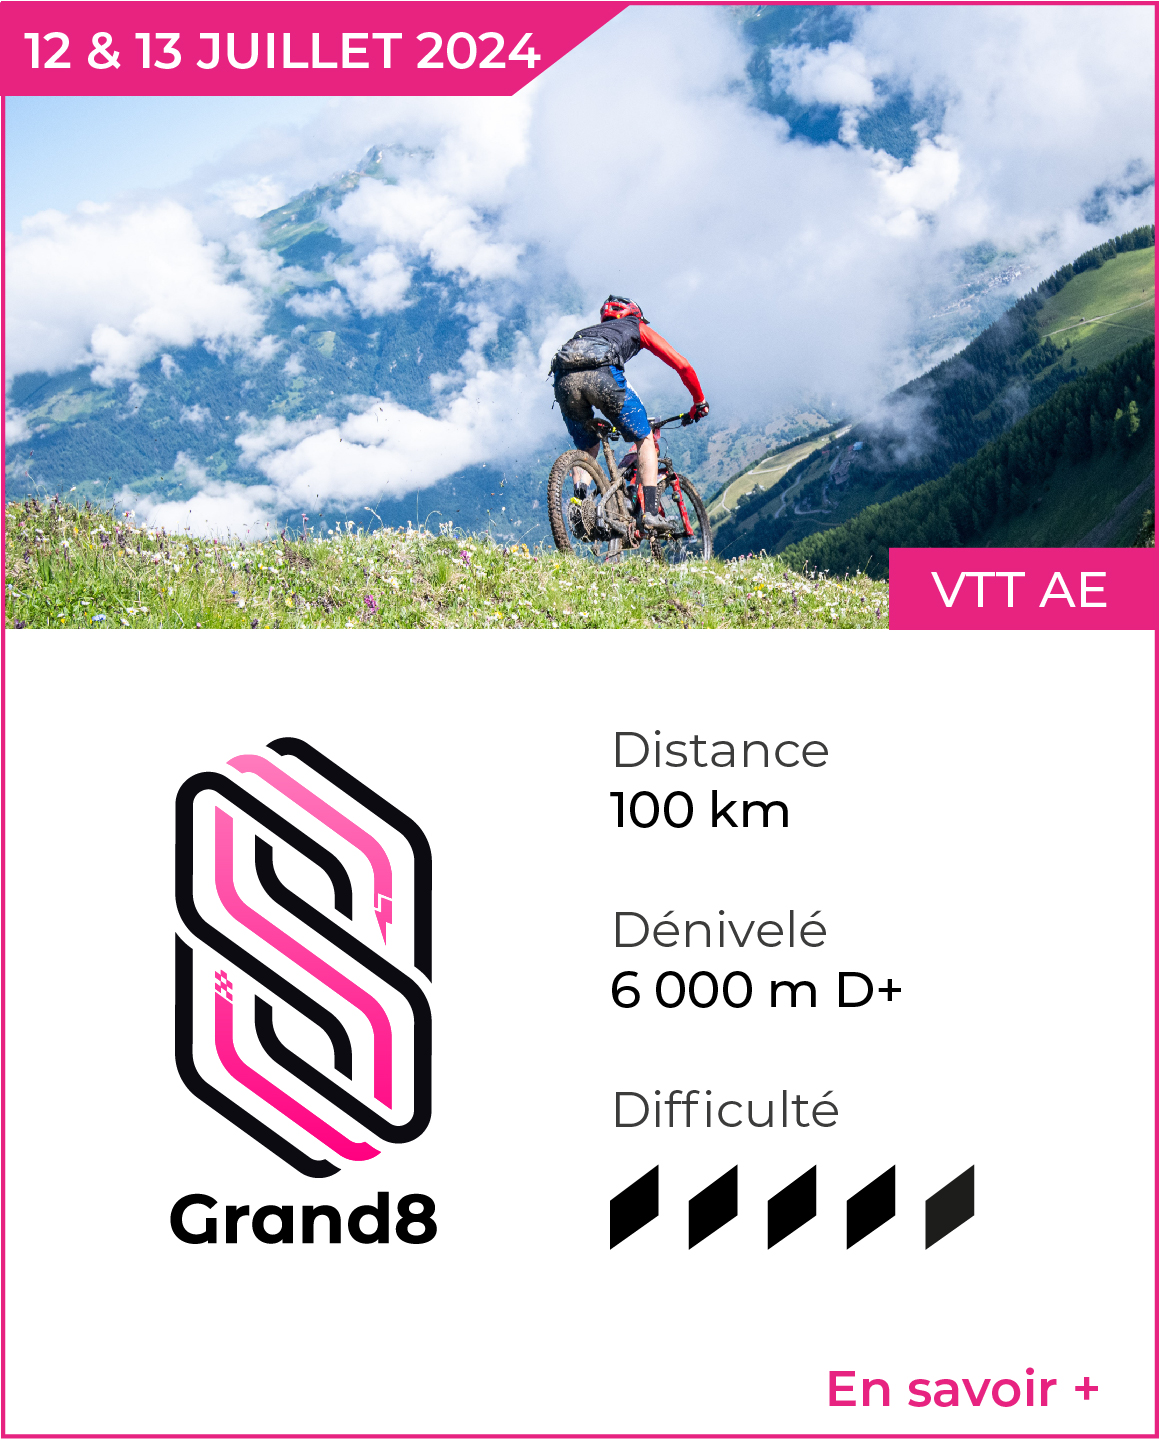 GRAND8 - Juillet 2024 - Savoie 